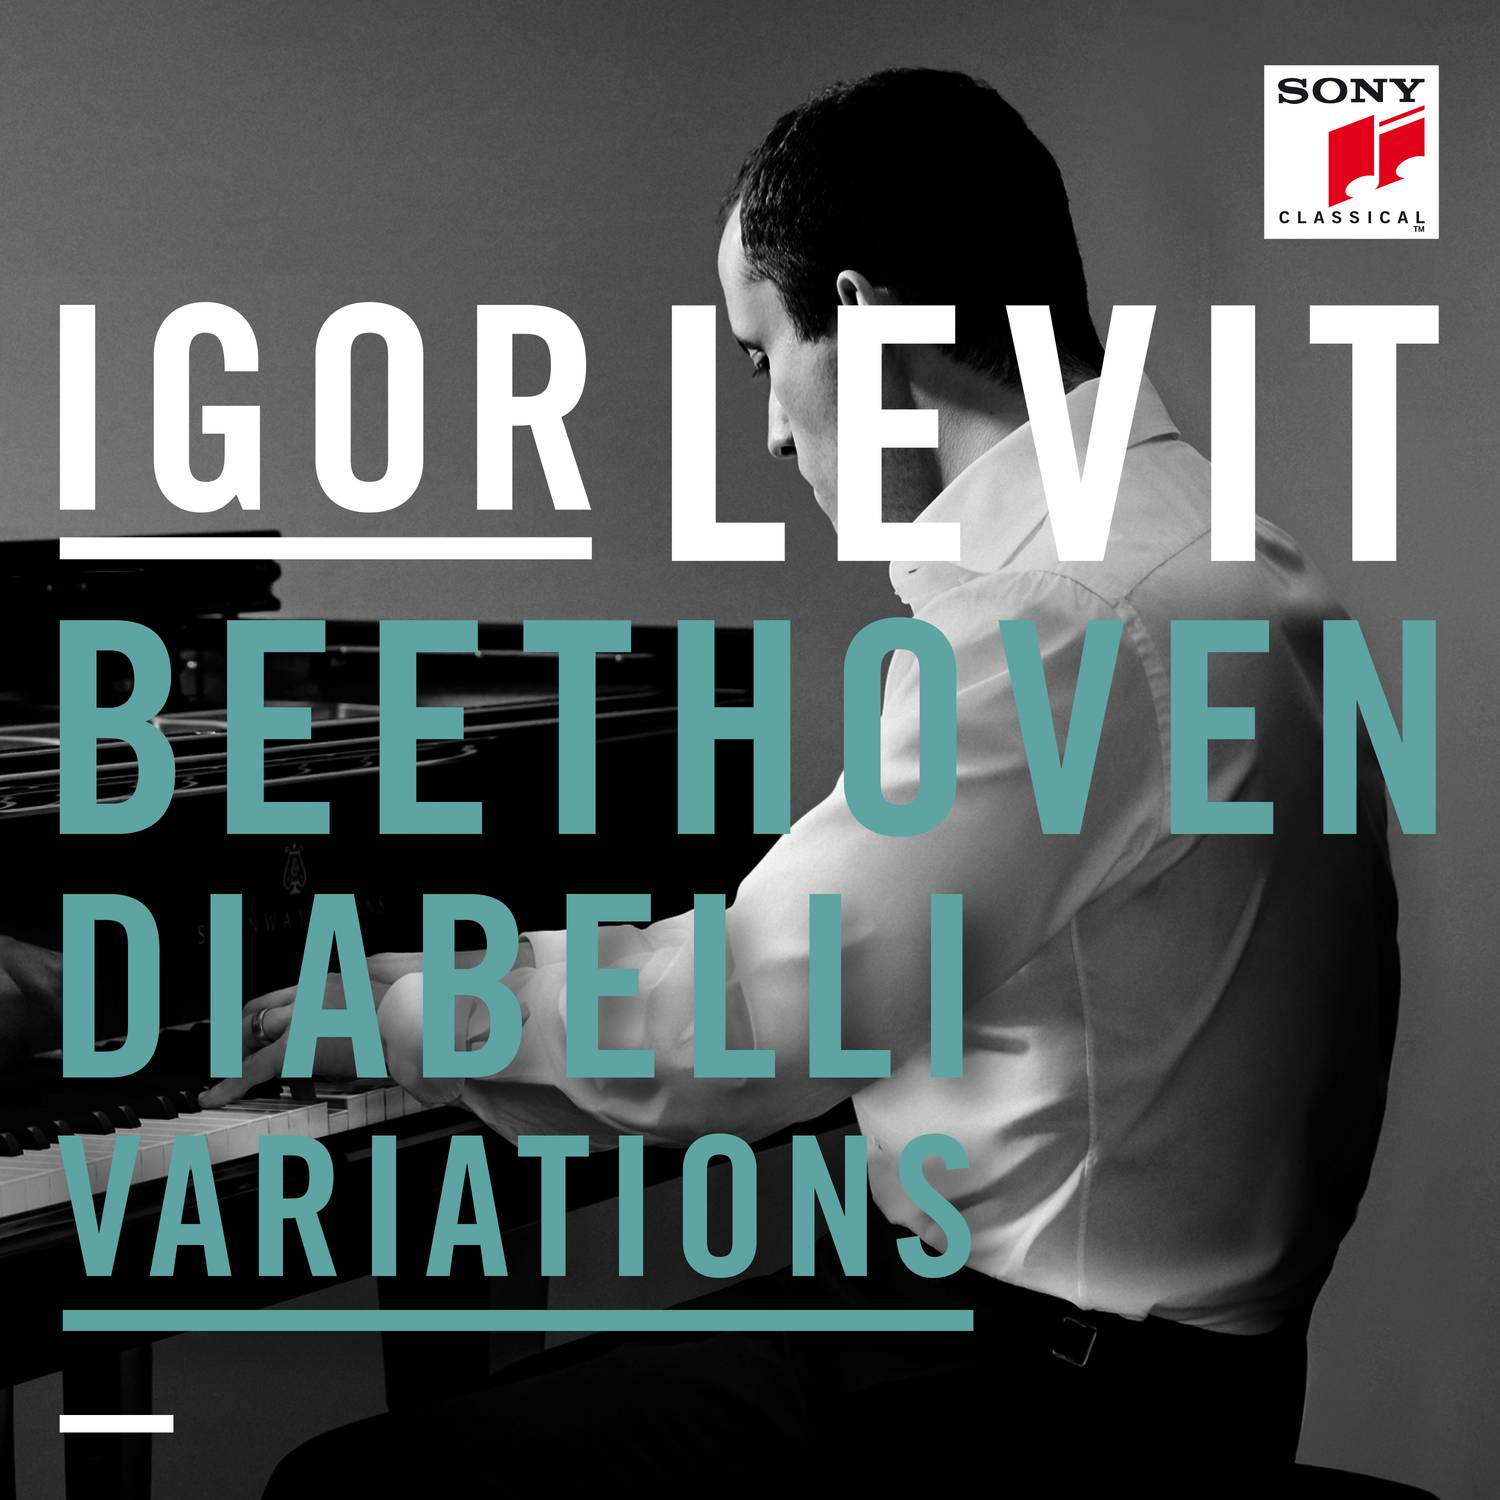 Diabelli Variations - 33 Variations on a Waltz by Anton Diabelli, Op. 120:Var. 29 - Adagio ma non troppo